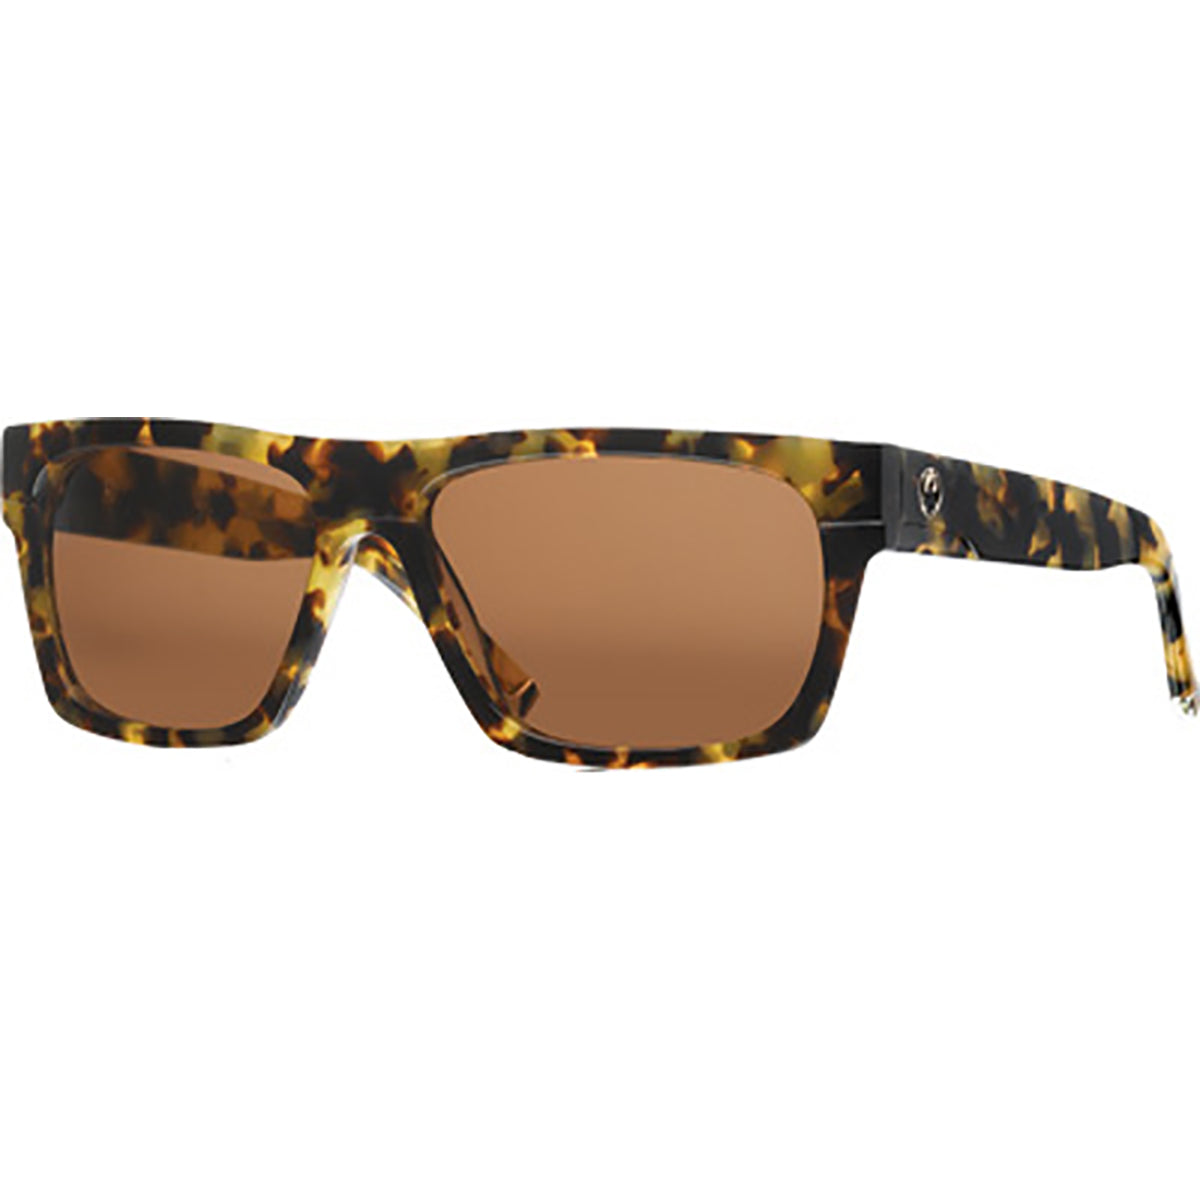 Dragon Viceroy Men's Lifestyle Polarized Sunglasses (Brand New